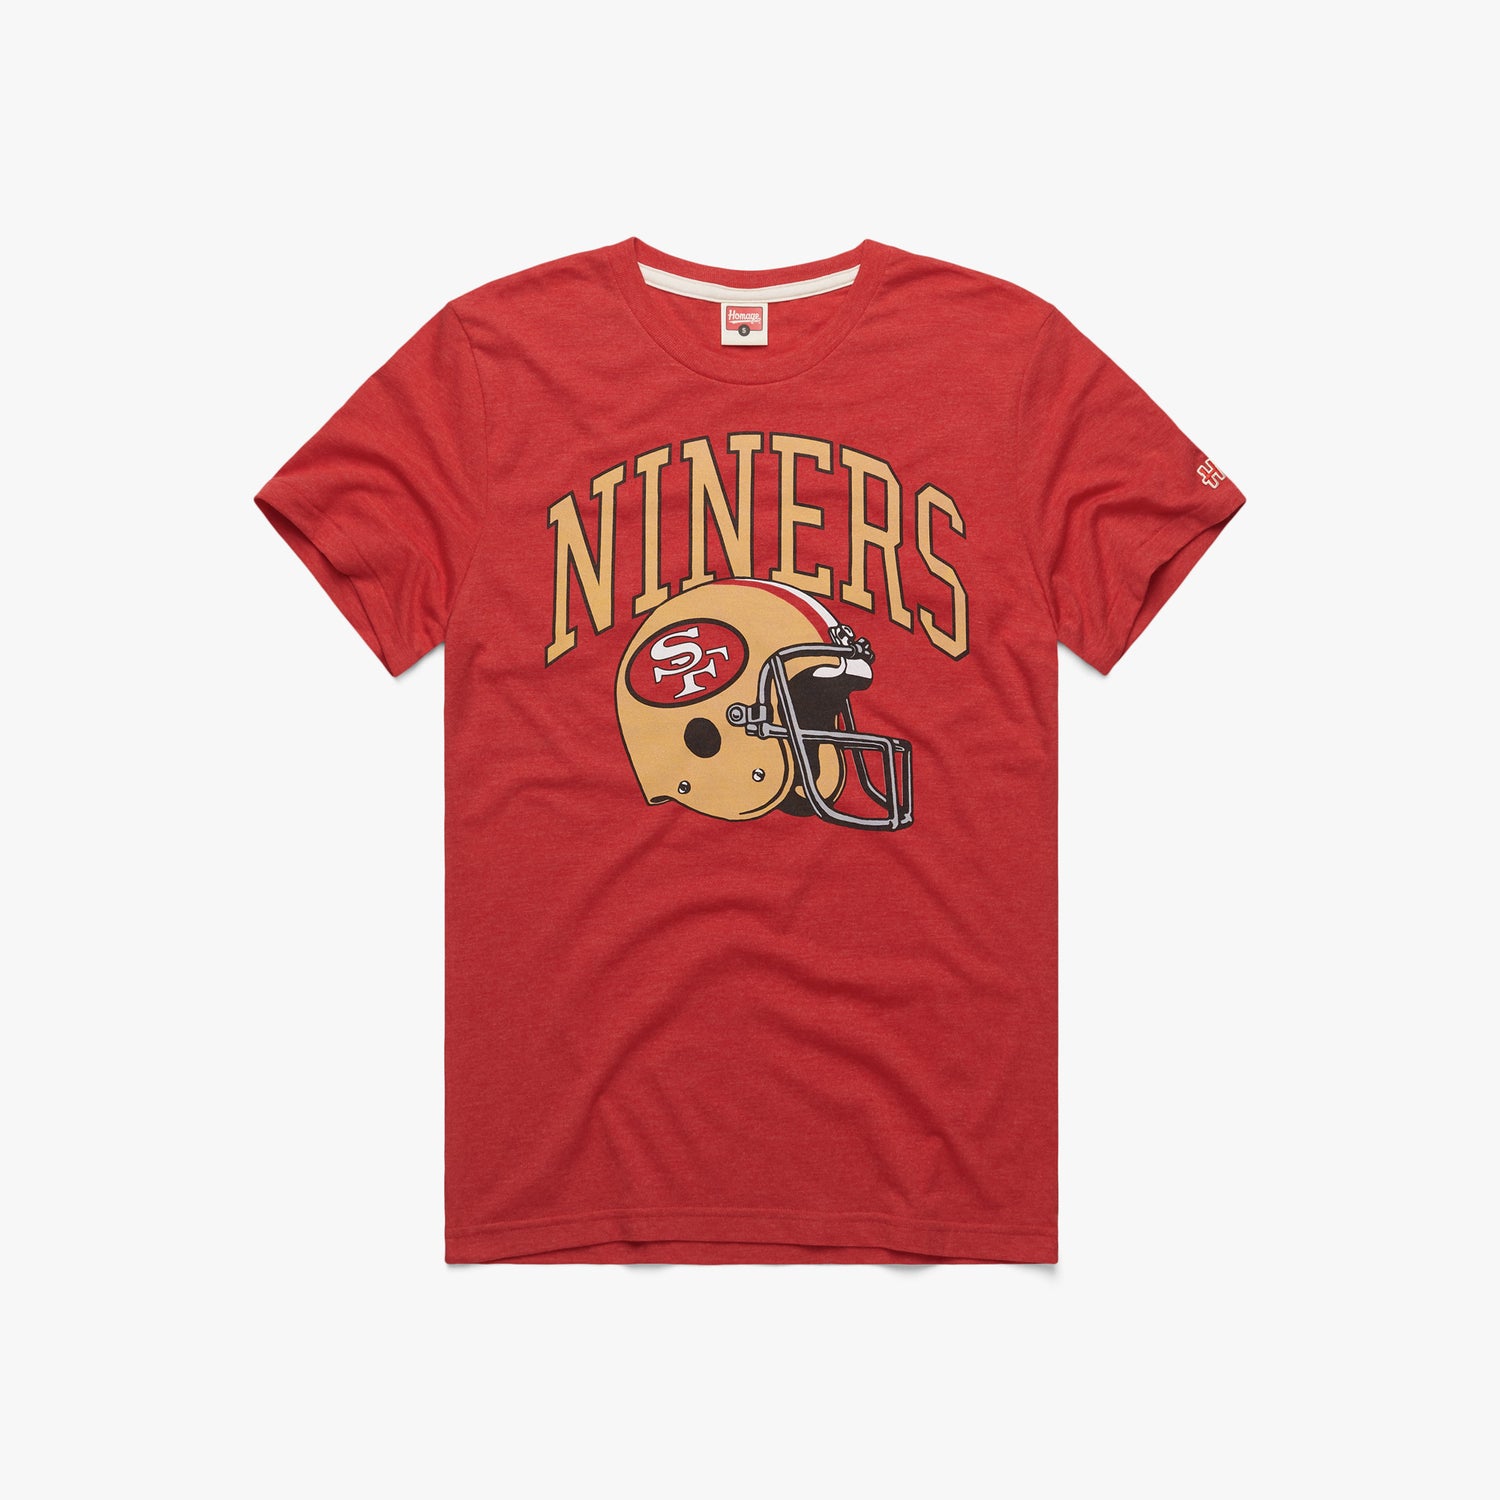 49ers pride shirt